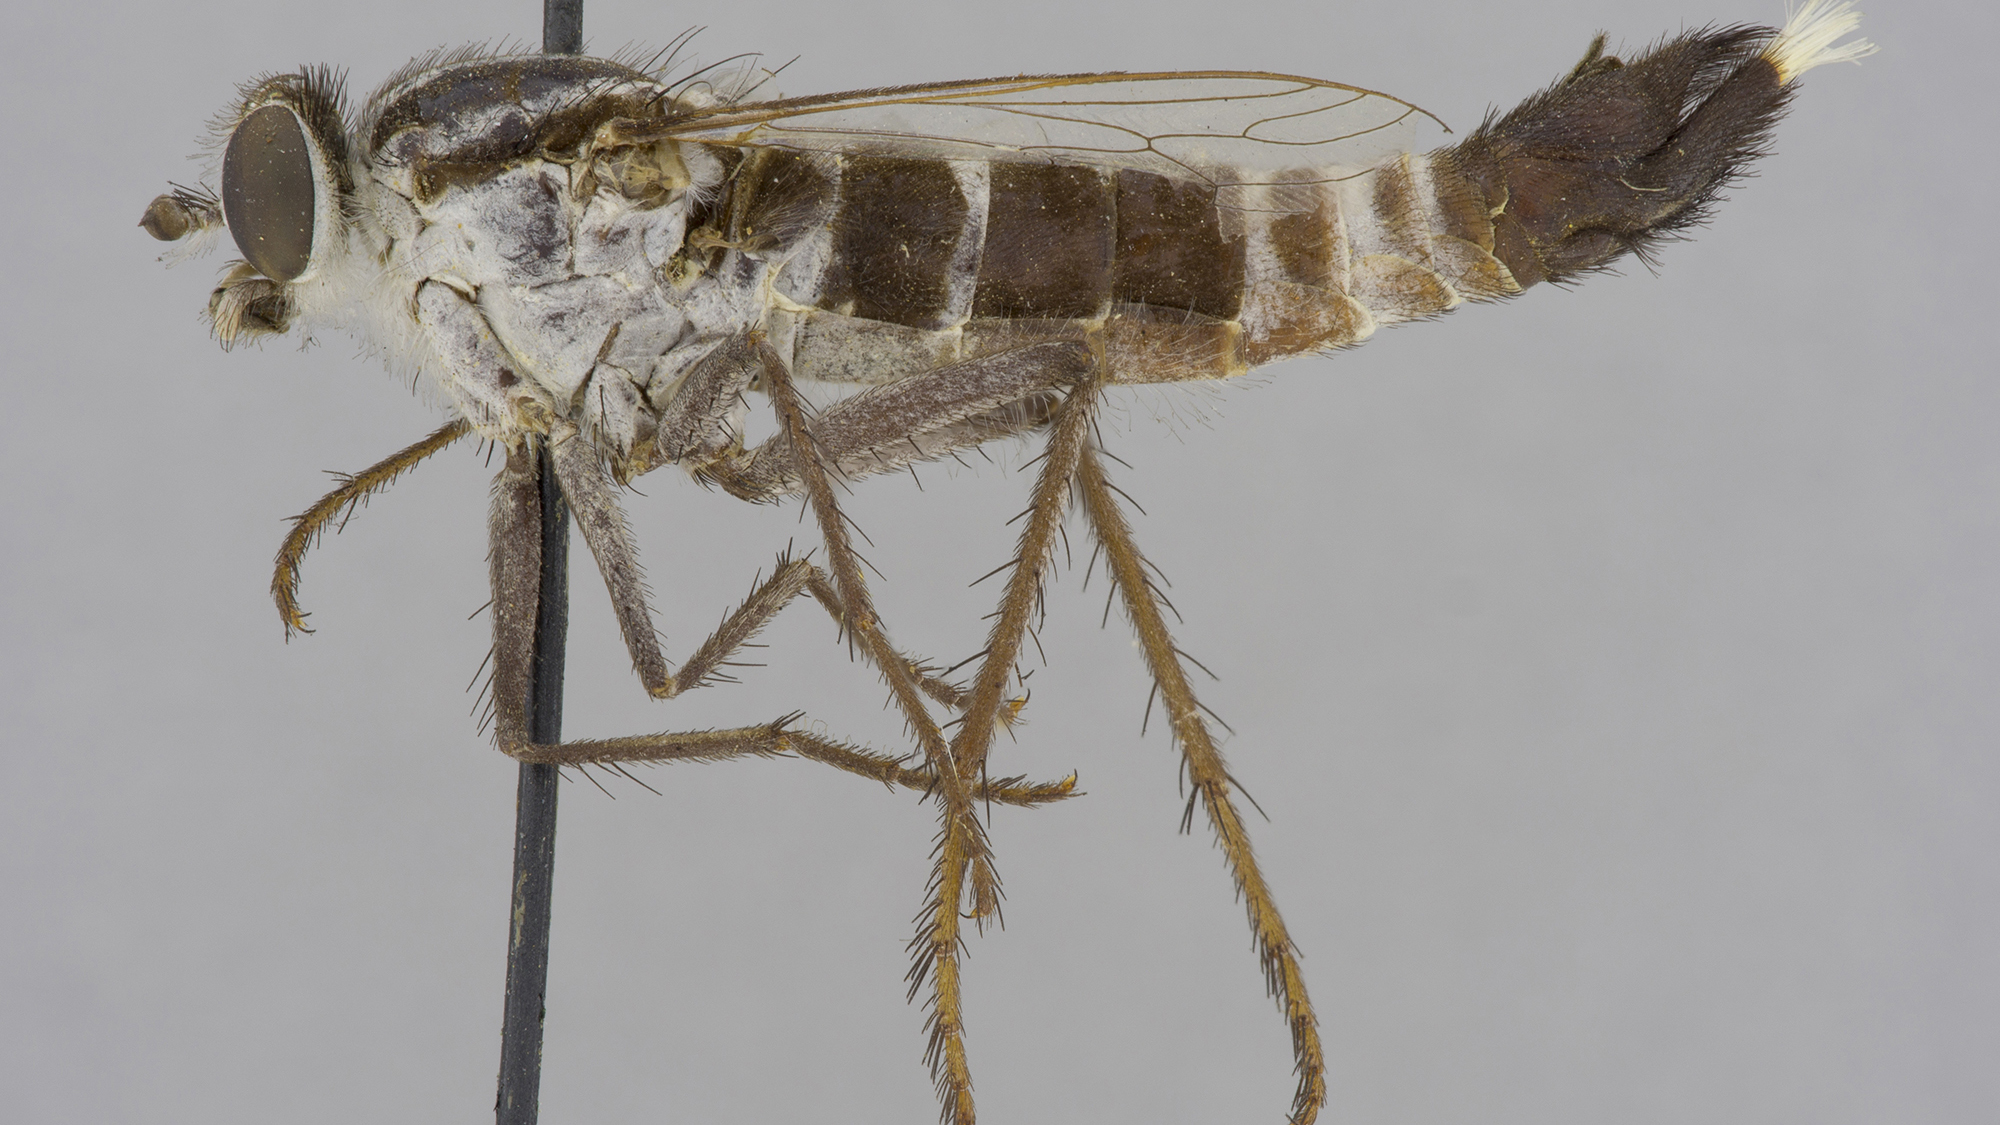 Novel cybercatalog of flower-loving flies suggests the digital future of taxonomy